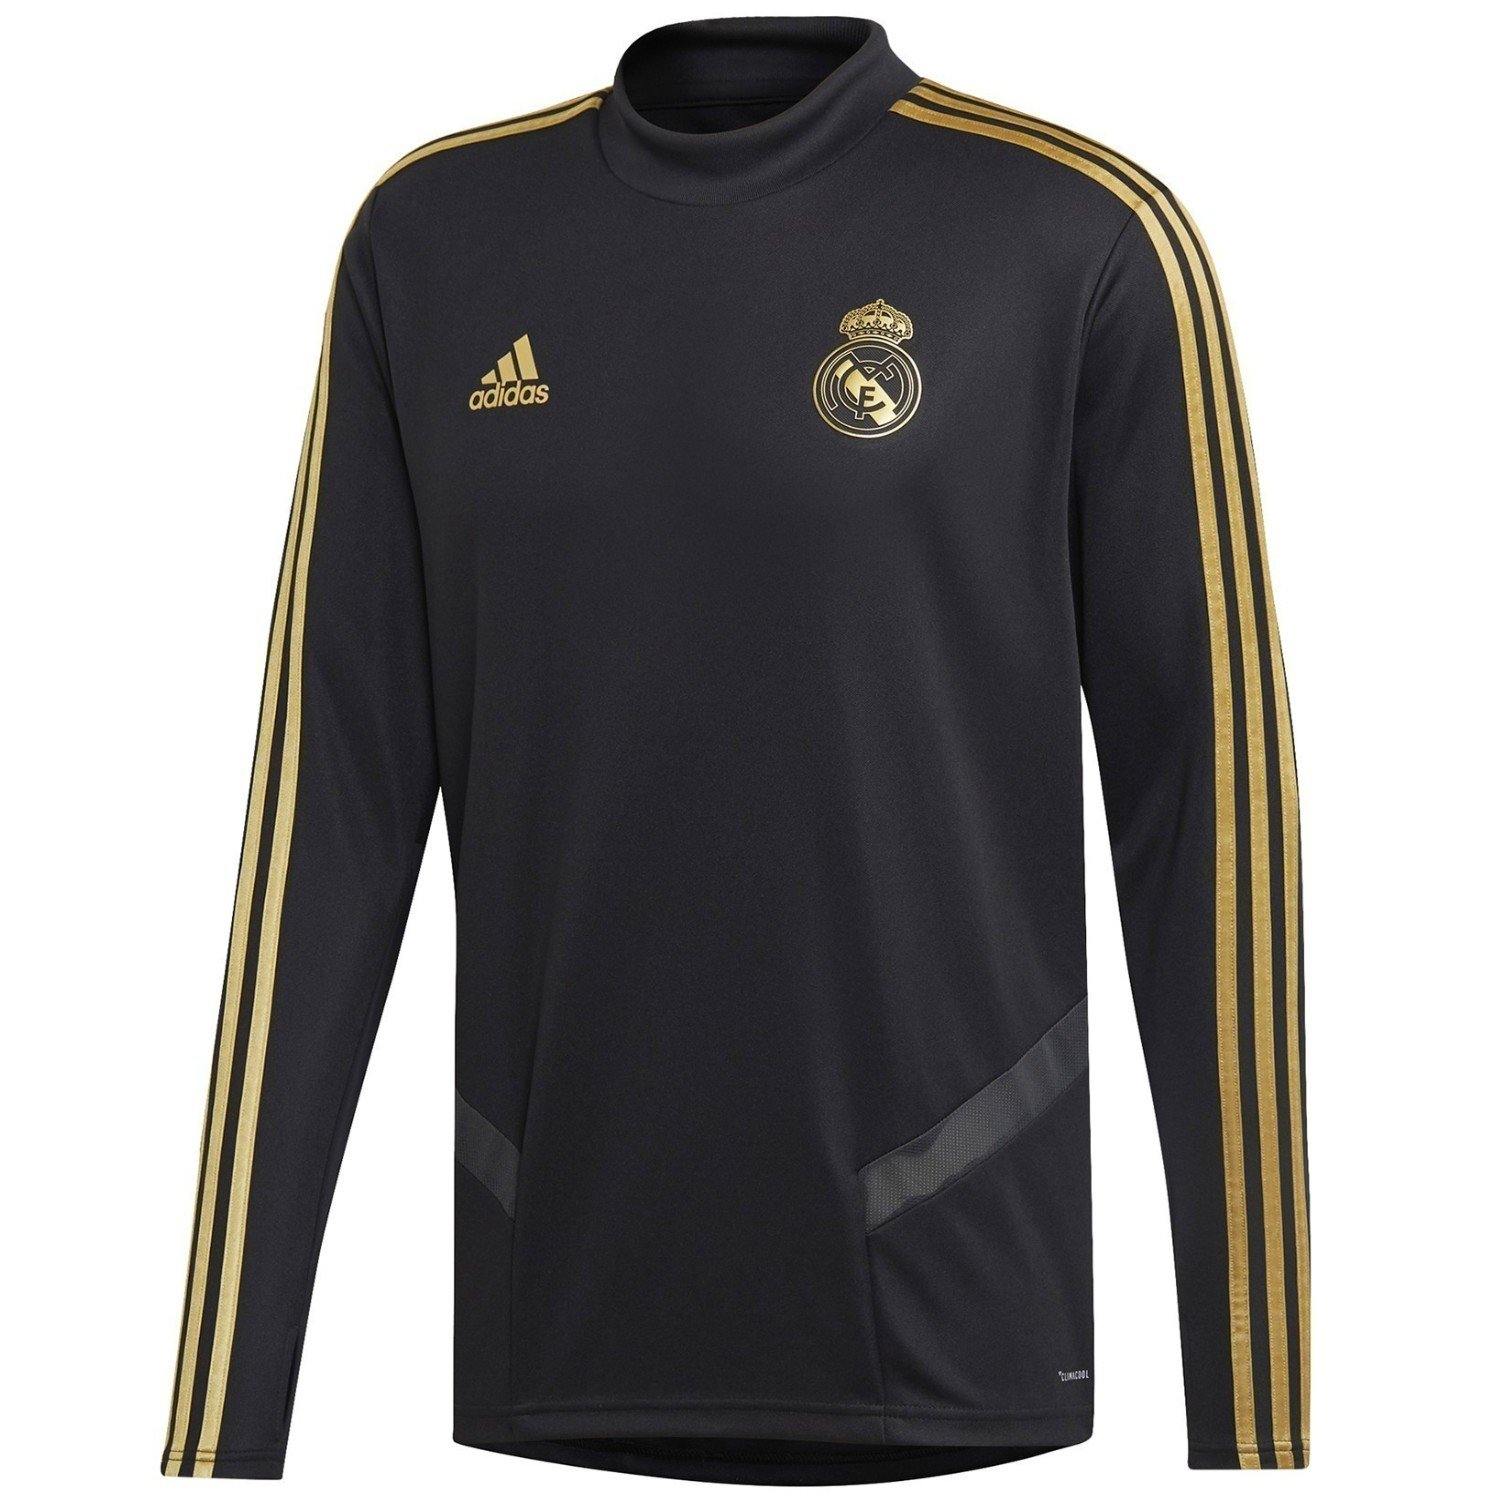 ADIDAS TEKA Real Madrid BLACK/GOLD Stripe Soccer Jersey SIZE XL Mint!